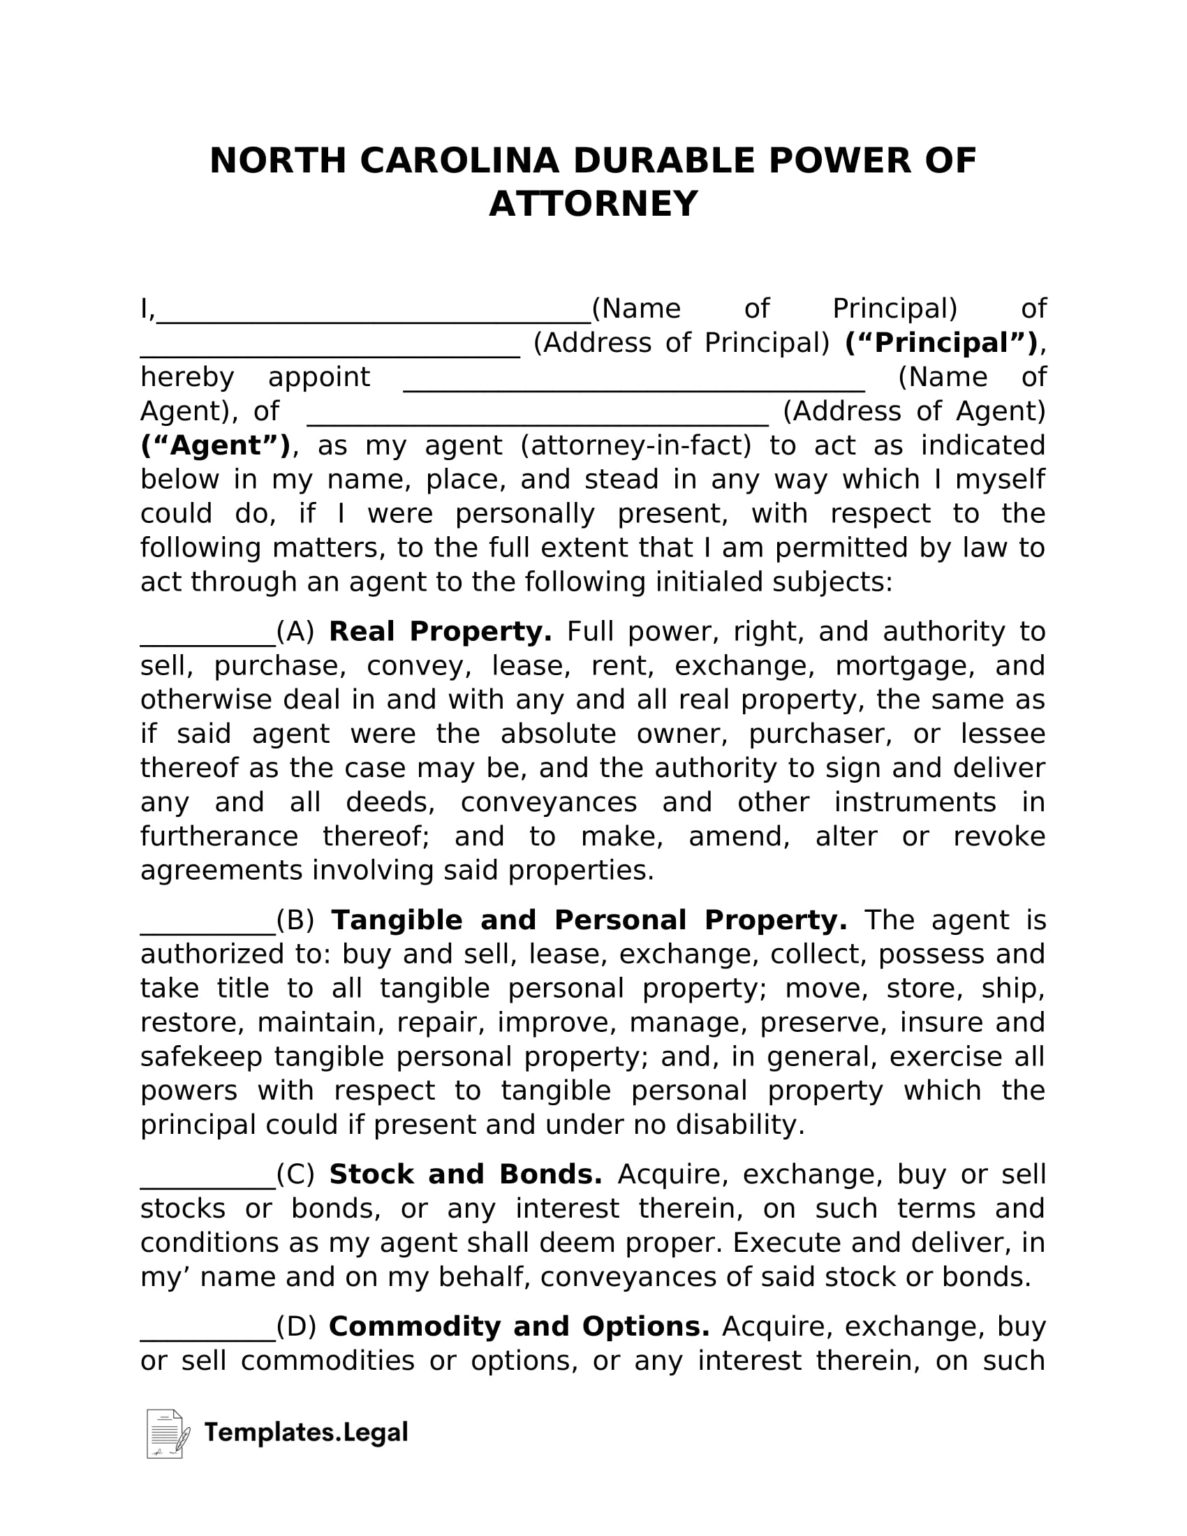 North Carolina Power of Attorney Templates (Free) Word PDF ODT